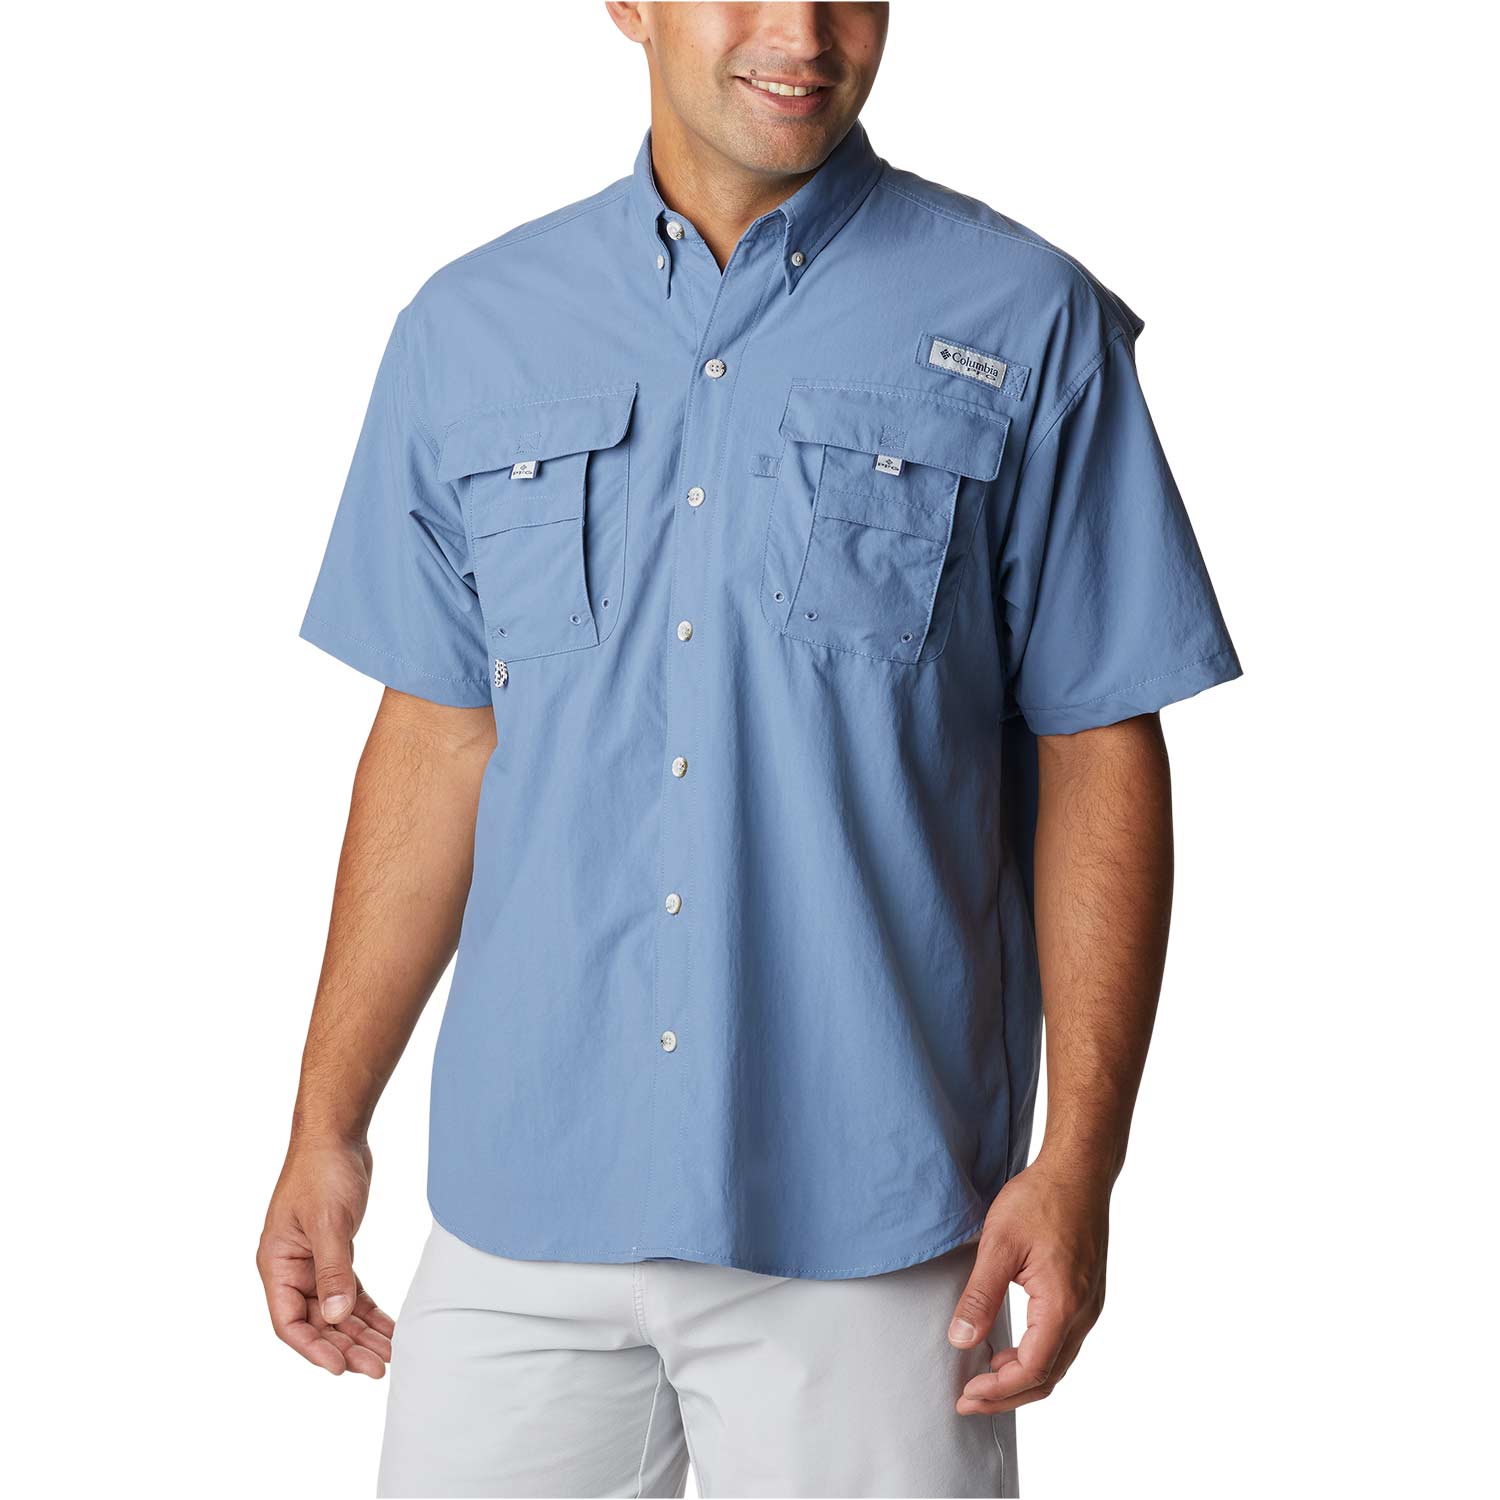 Monogrammed Men's Columbia PFG Fishing Shirt